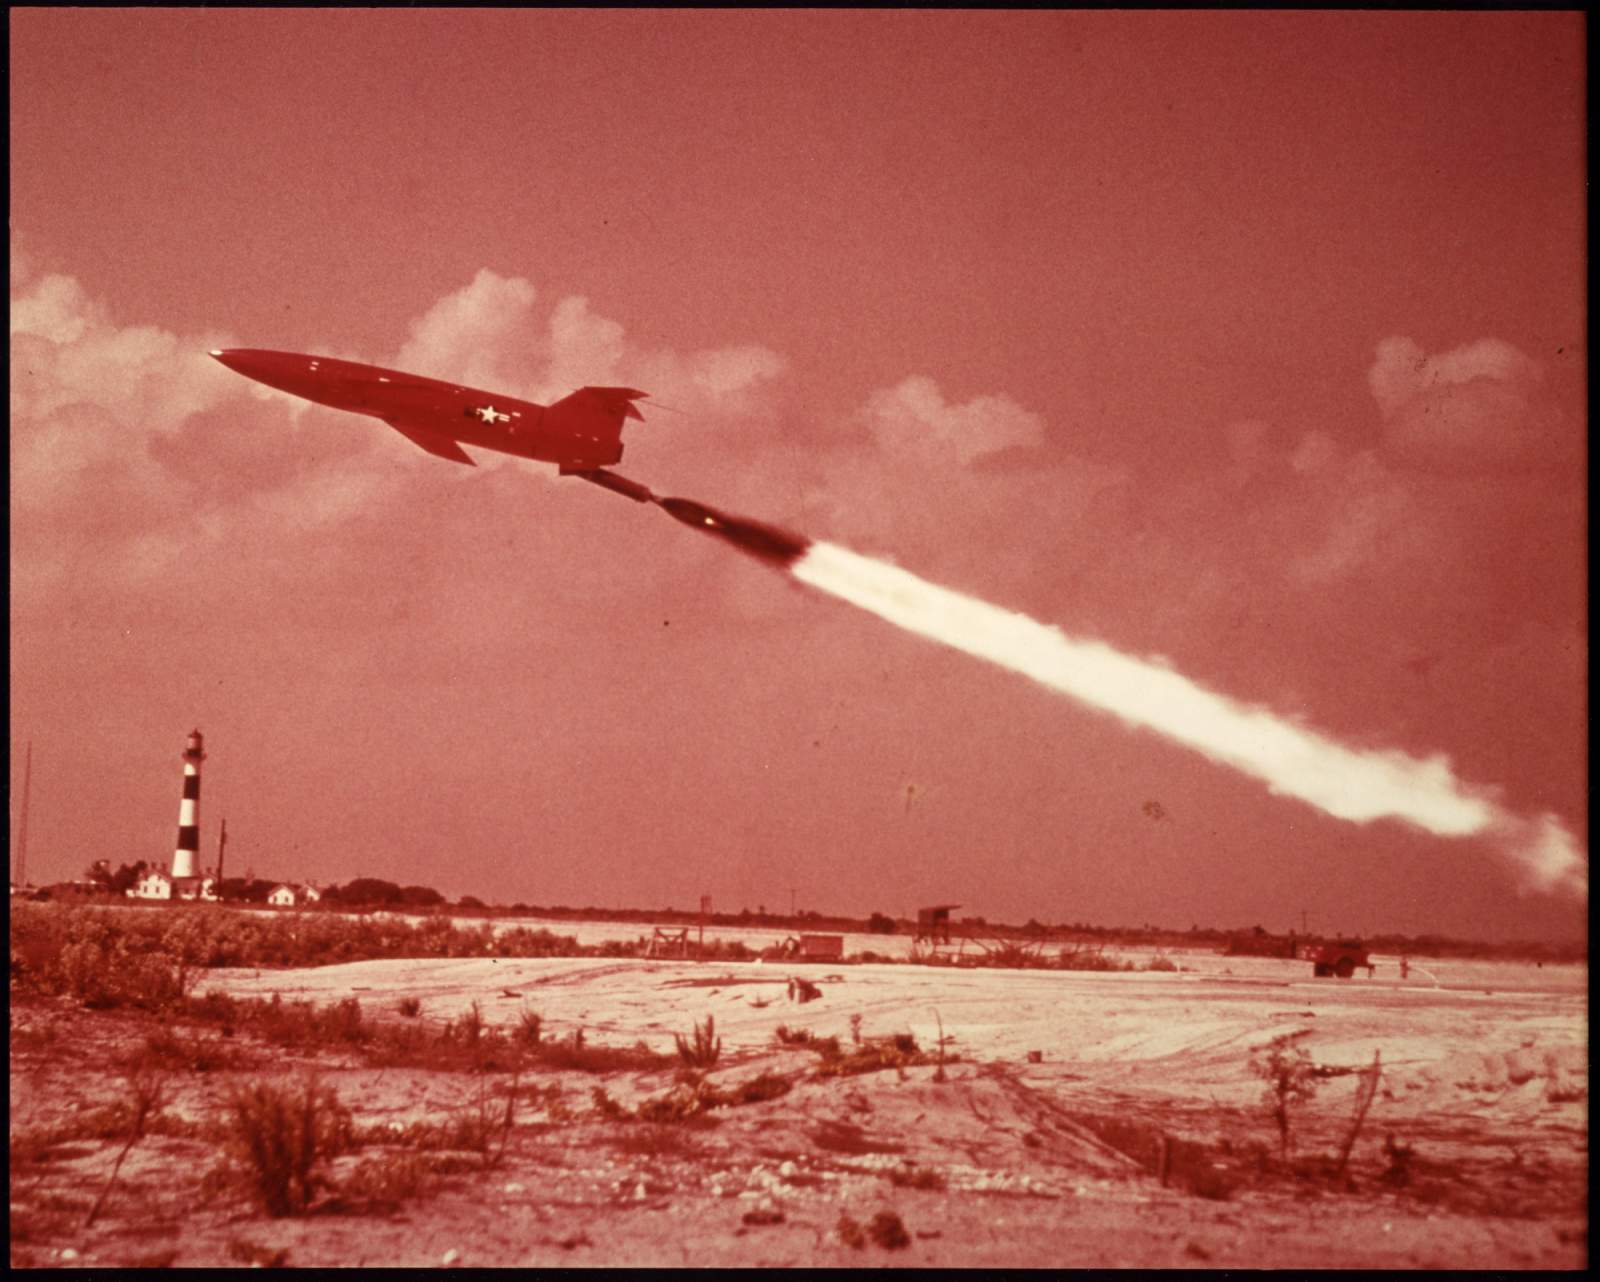 Matador Launch, Photo Courtesy U.S. Air Force